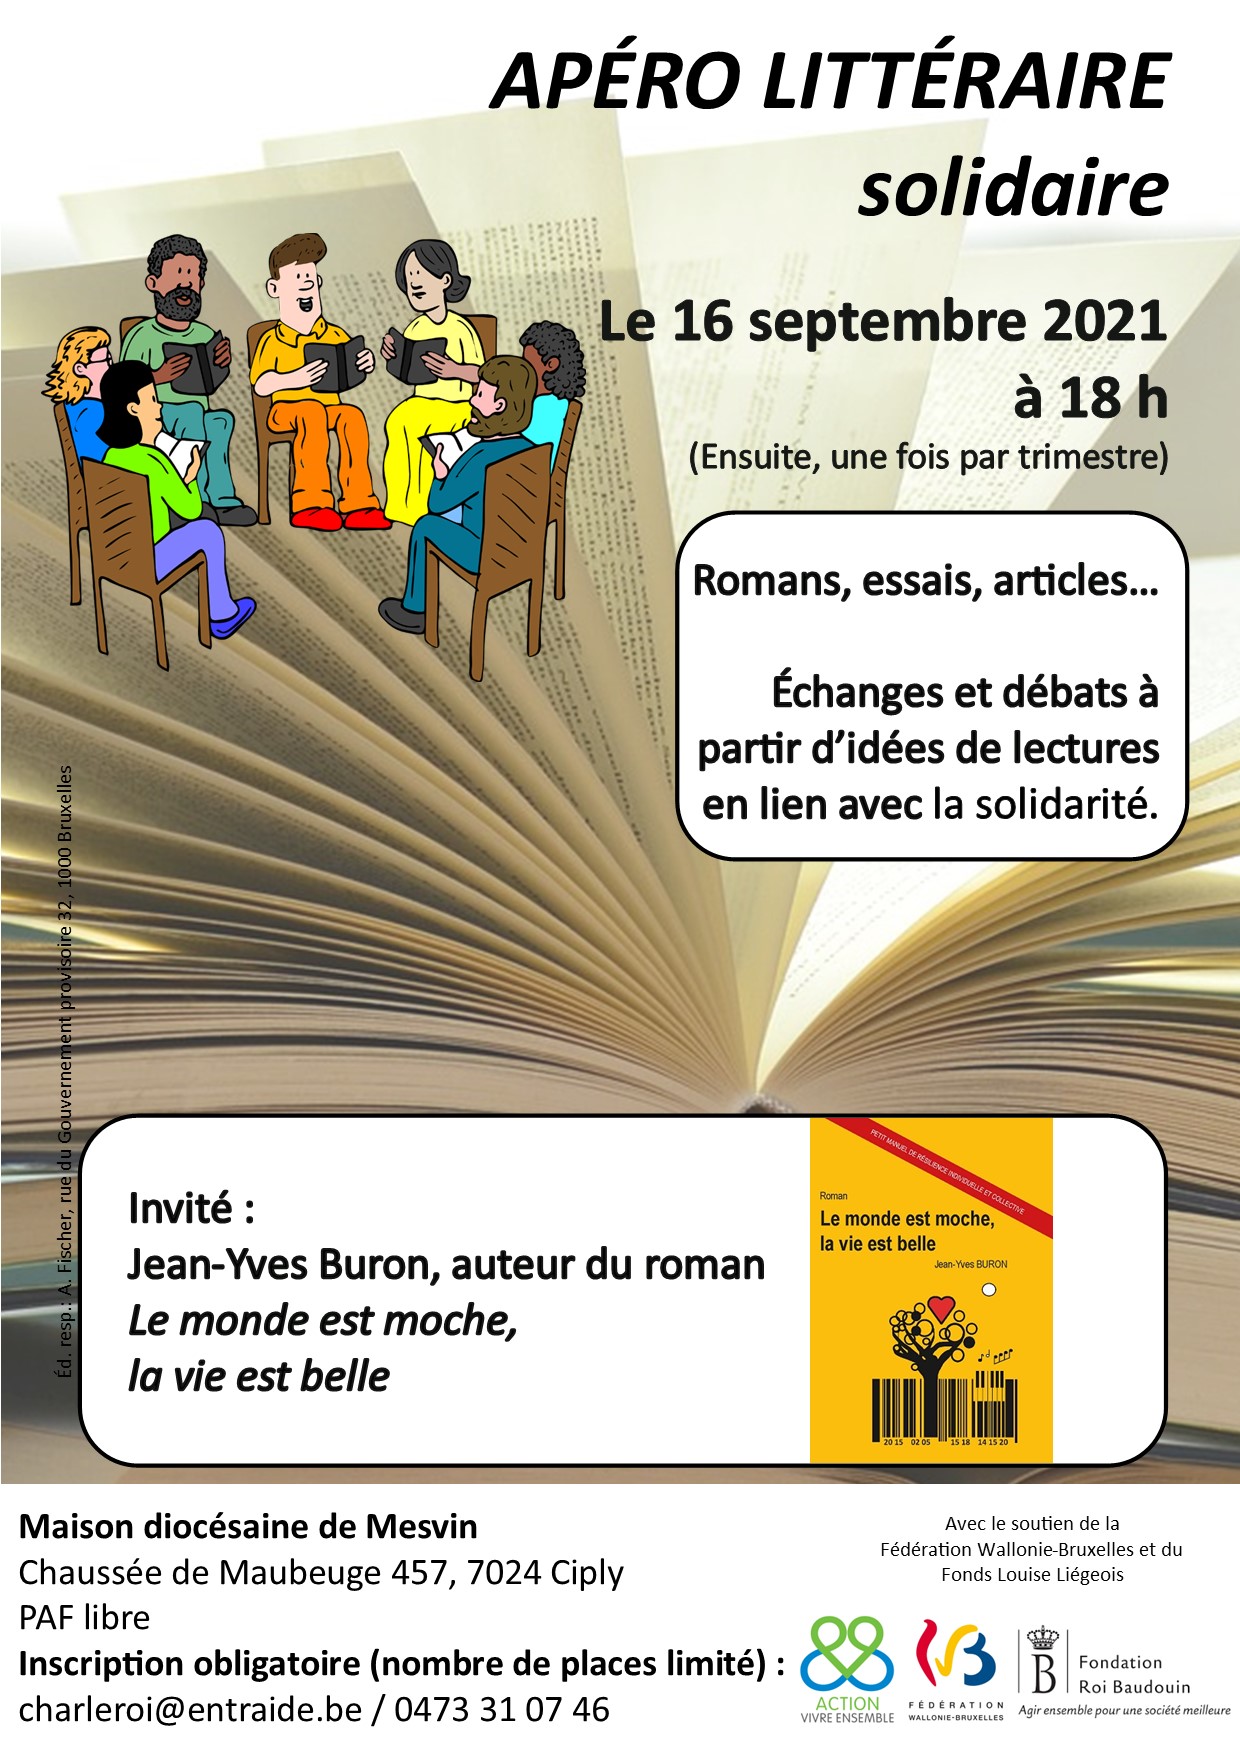 Apero litteraire solidaire 16 septembre 2021